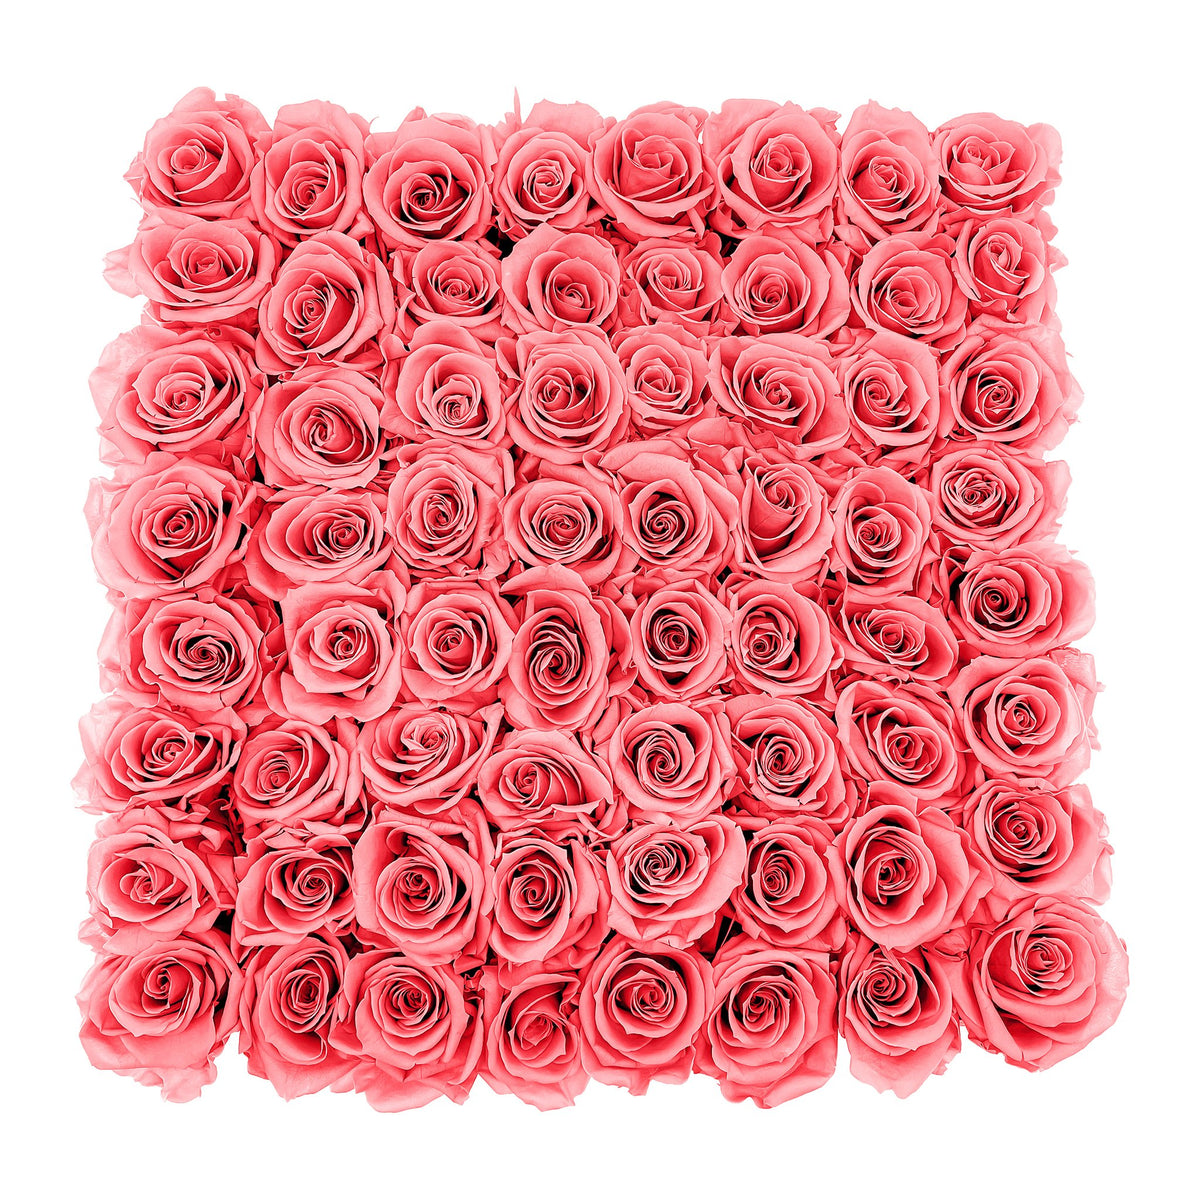 Preserved Roses Large Box | Cherry Blossom - Roses